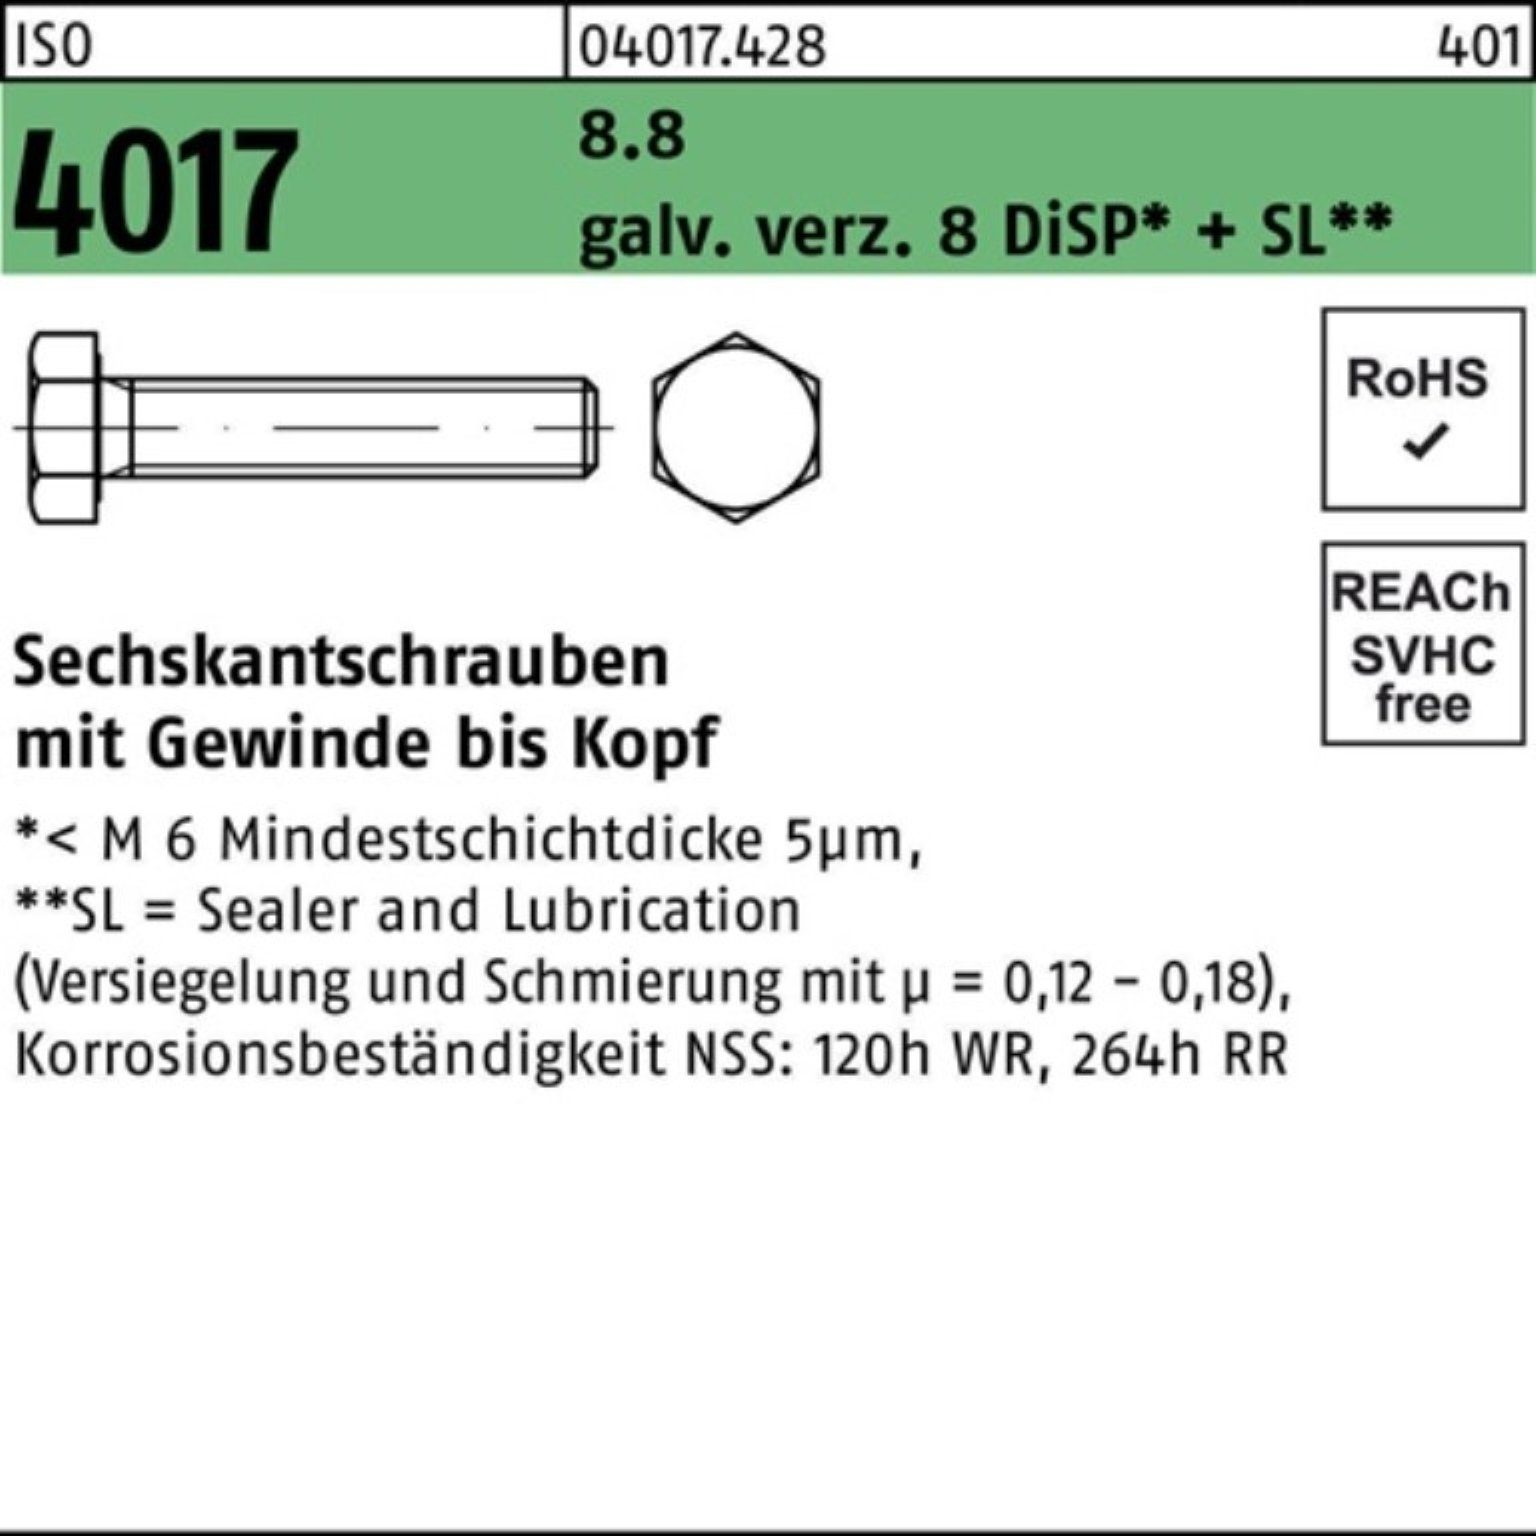 Sechskantschraube M12x VG Pack 140 DiS 4017 8 ISO galv.verz. Sechskantschraube 100er 8.8 Bufab